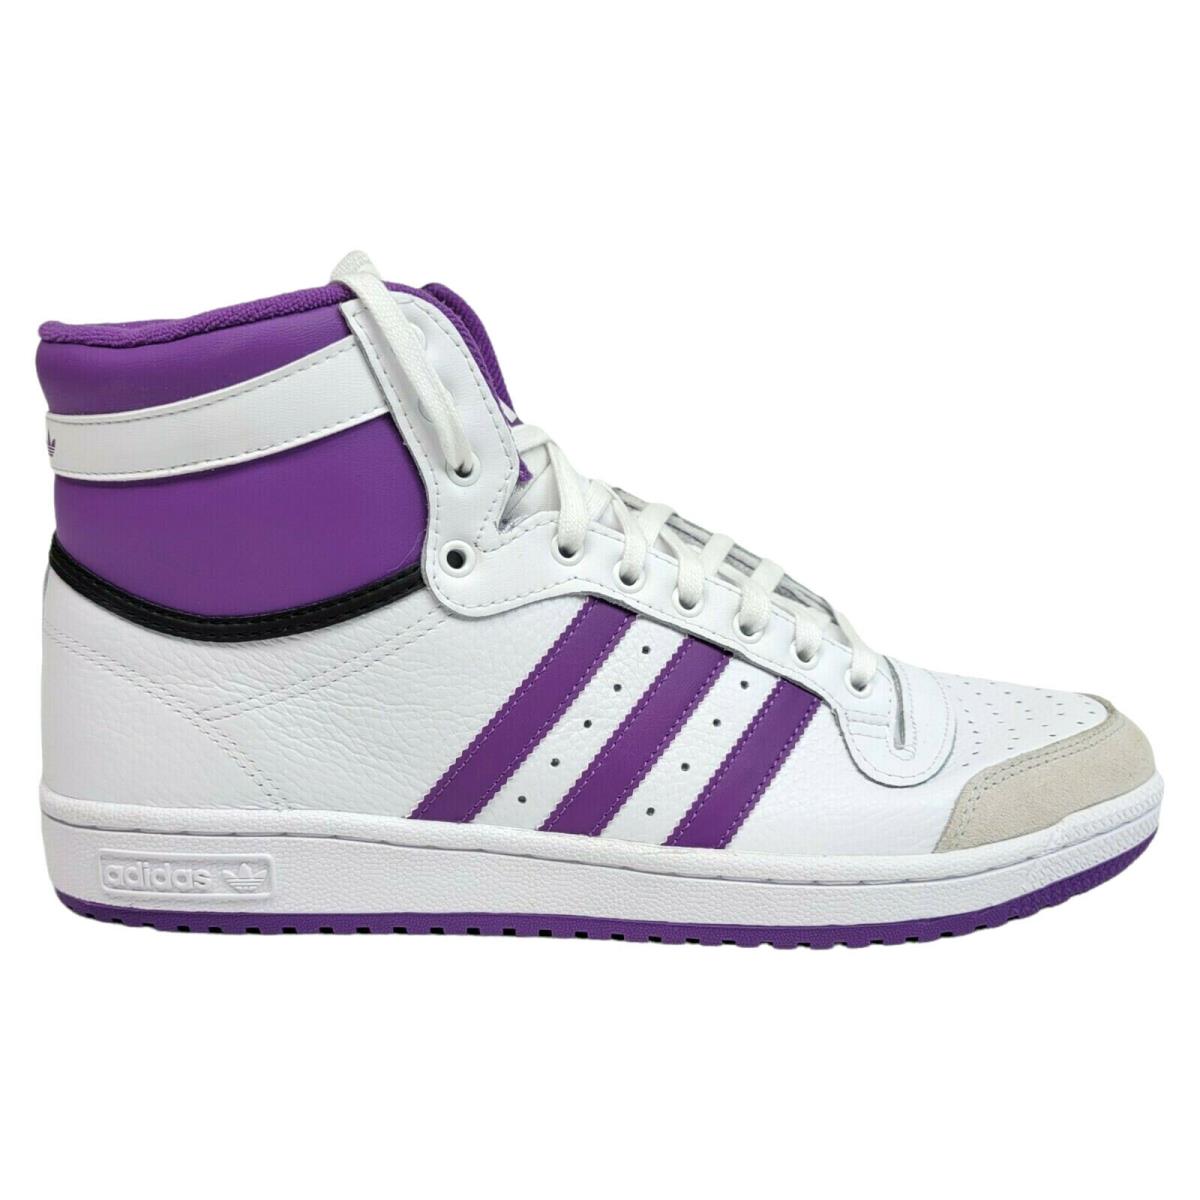 Adidas Originals Mens 10.5 Top Ten White Purple High Top Shoes Sneakers S24135